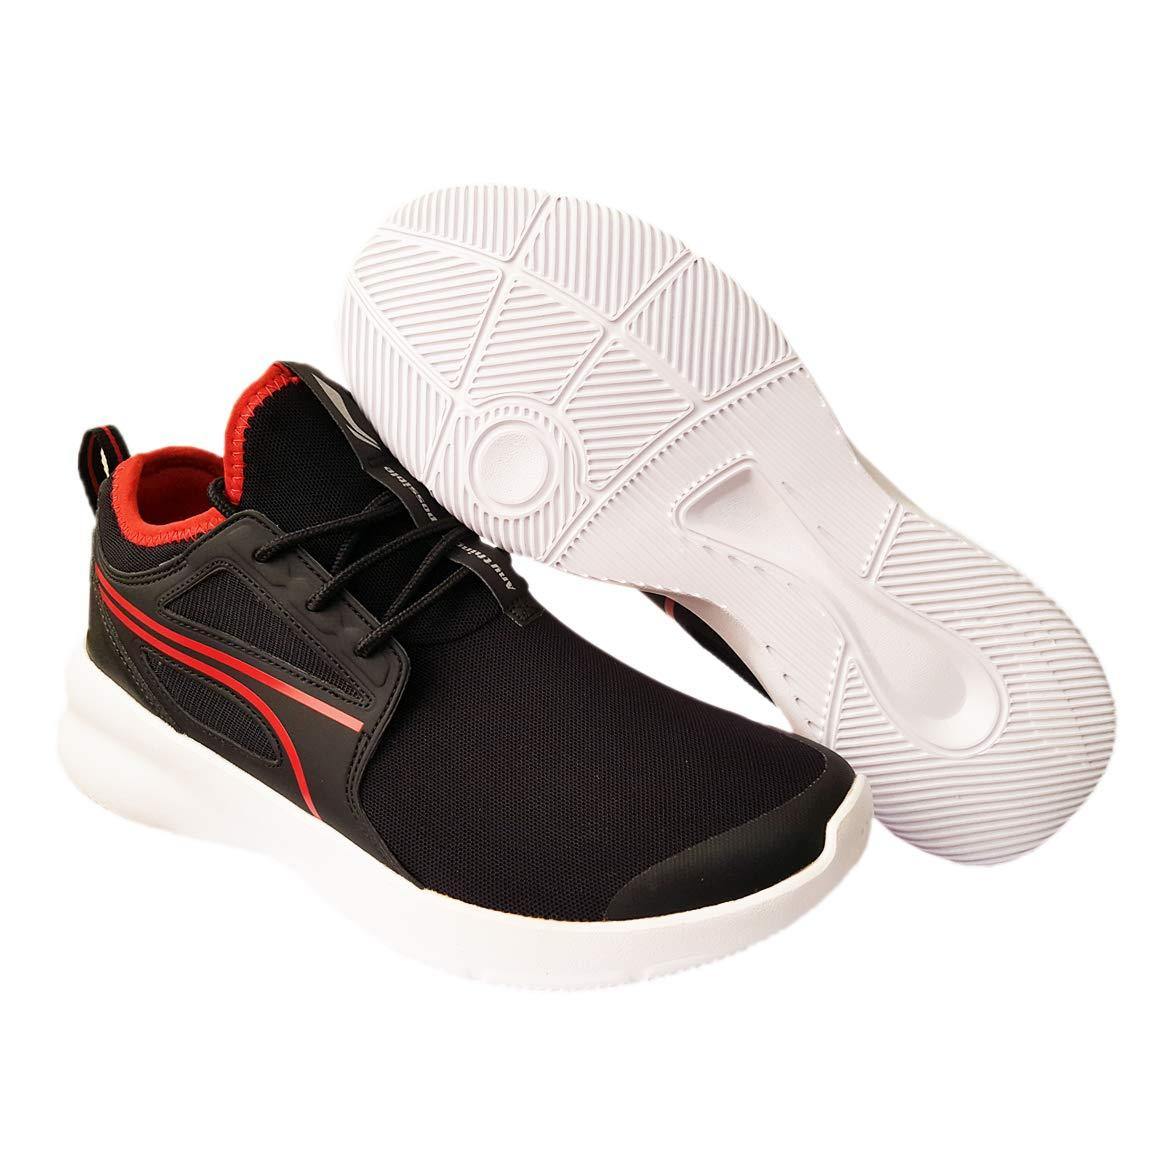 Li-Ning Basketball Culture Professional Basketball Shoes, Black/Crimson White - Best Price online Prokicksports.com